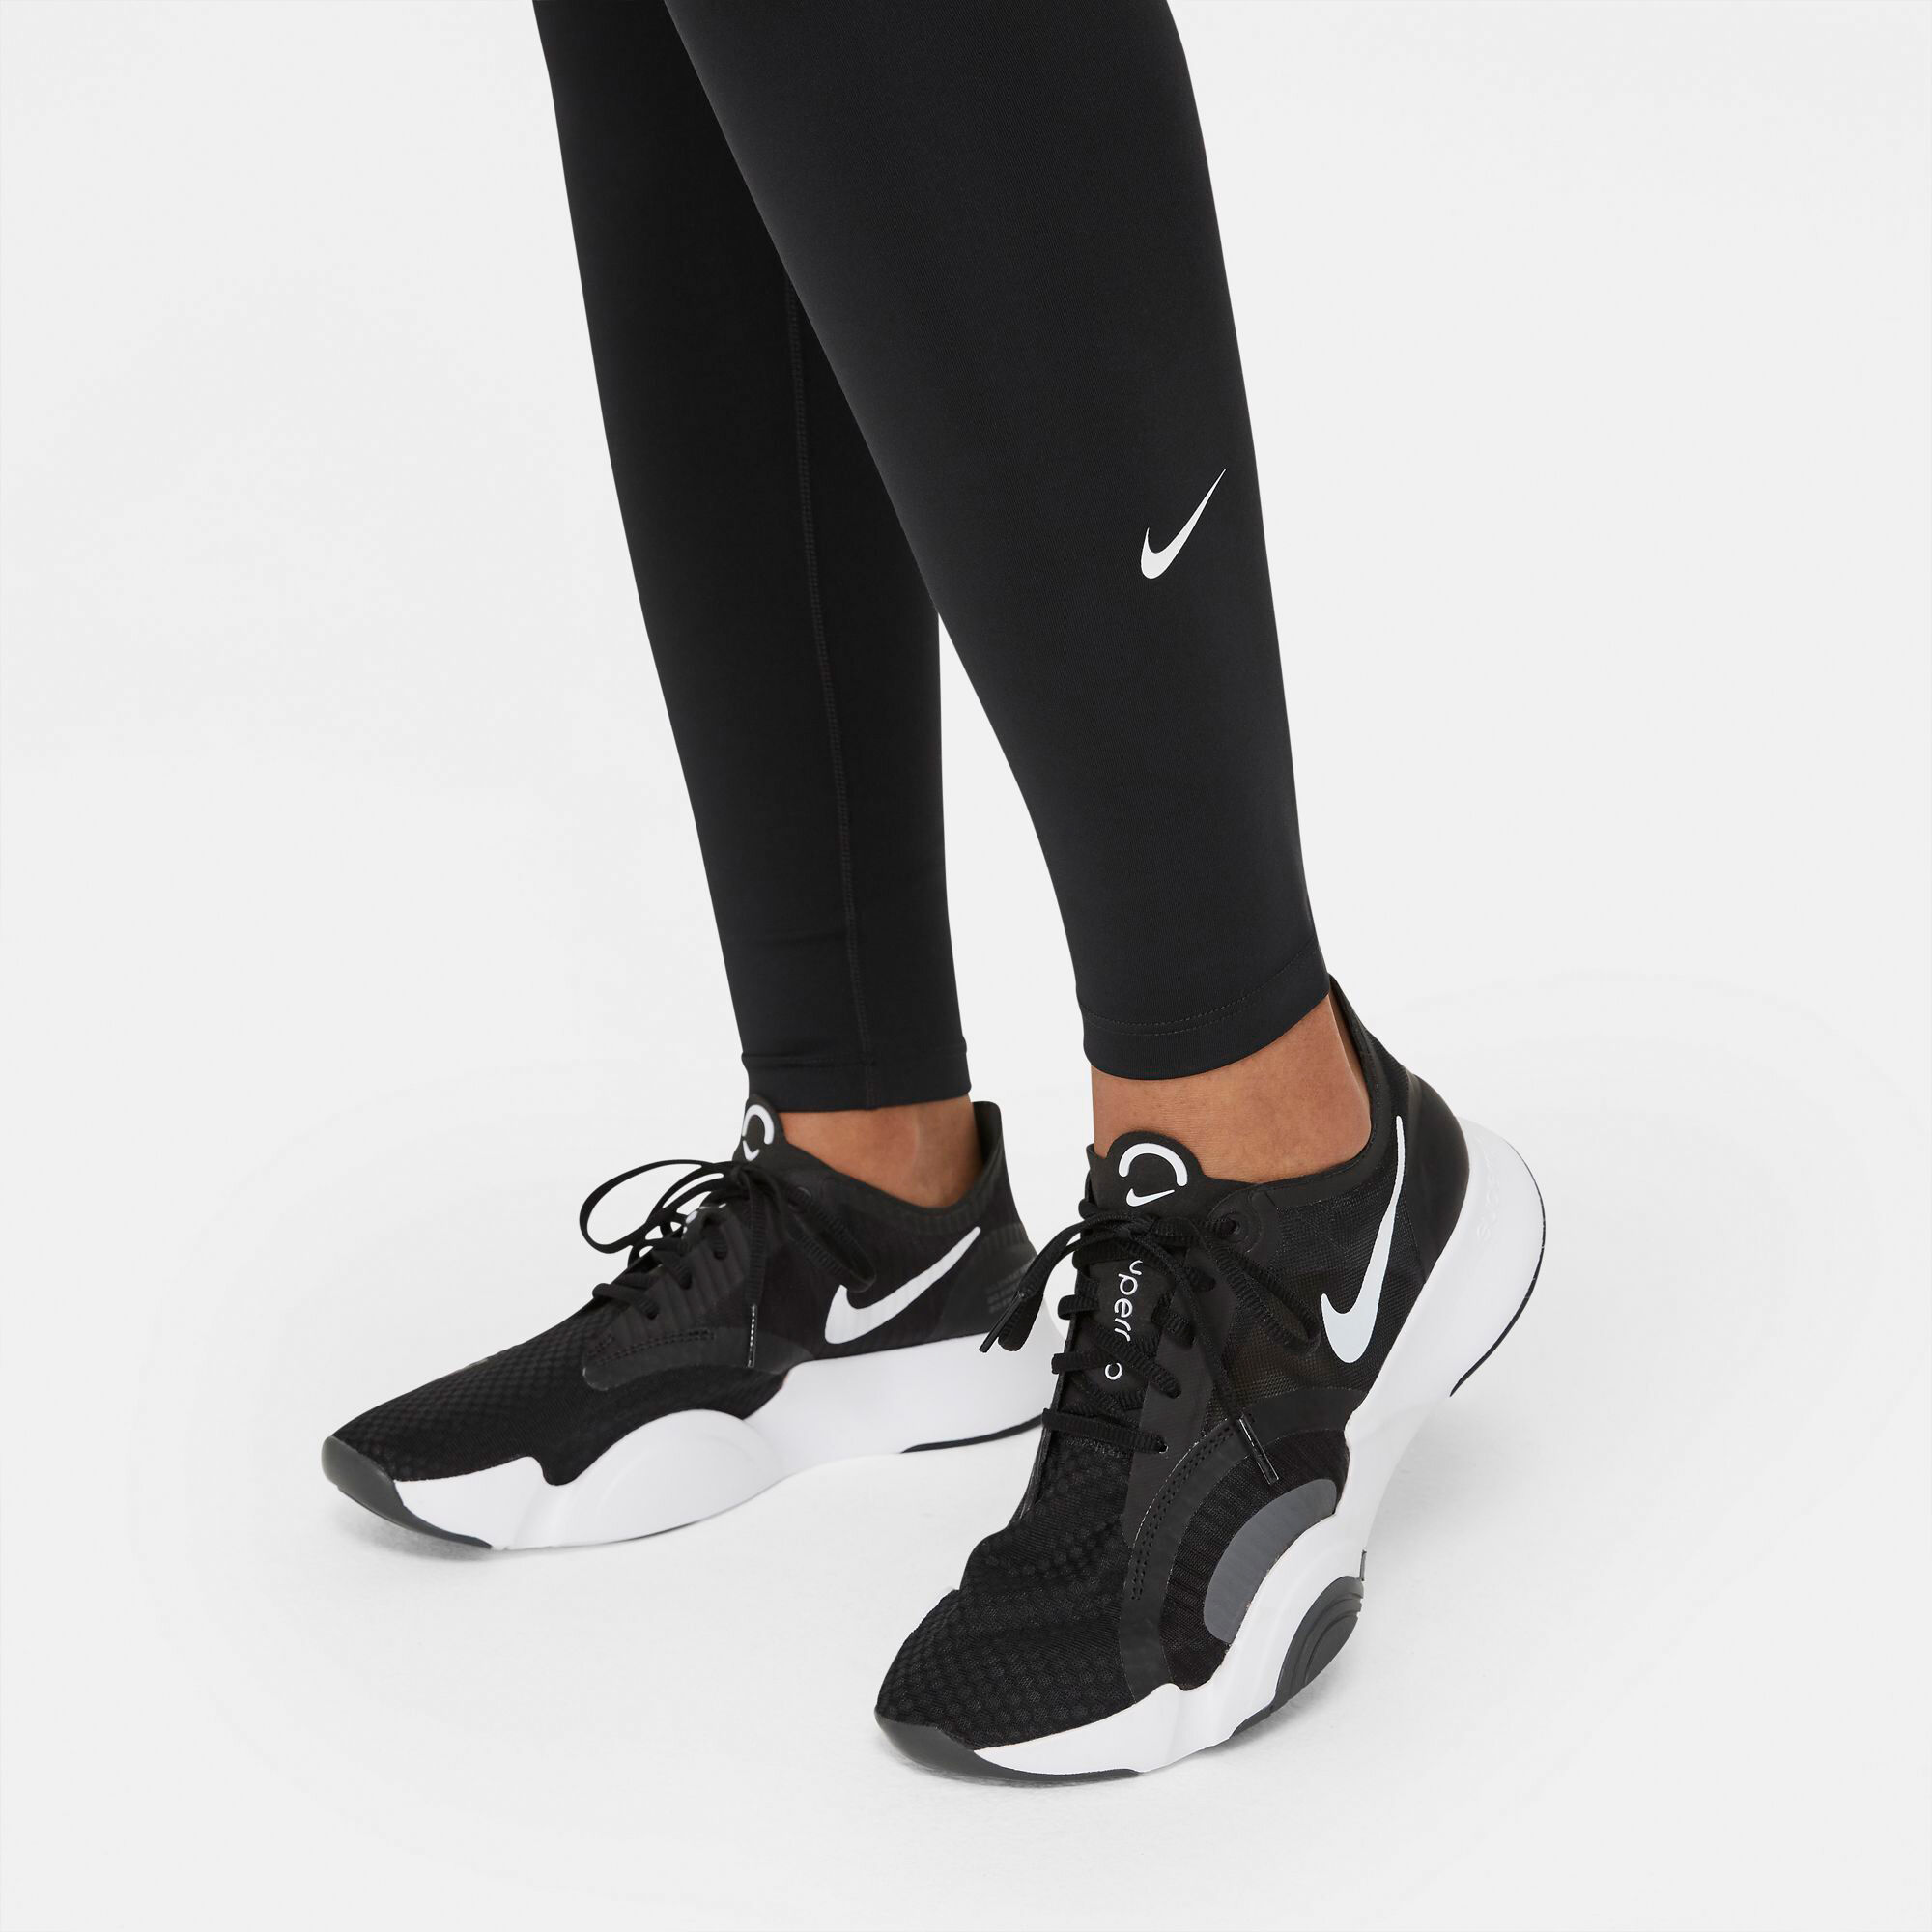 Buy Nike One Tight Women Black online | Tennis Point UK